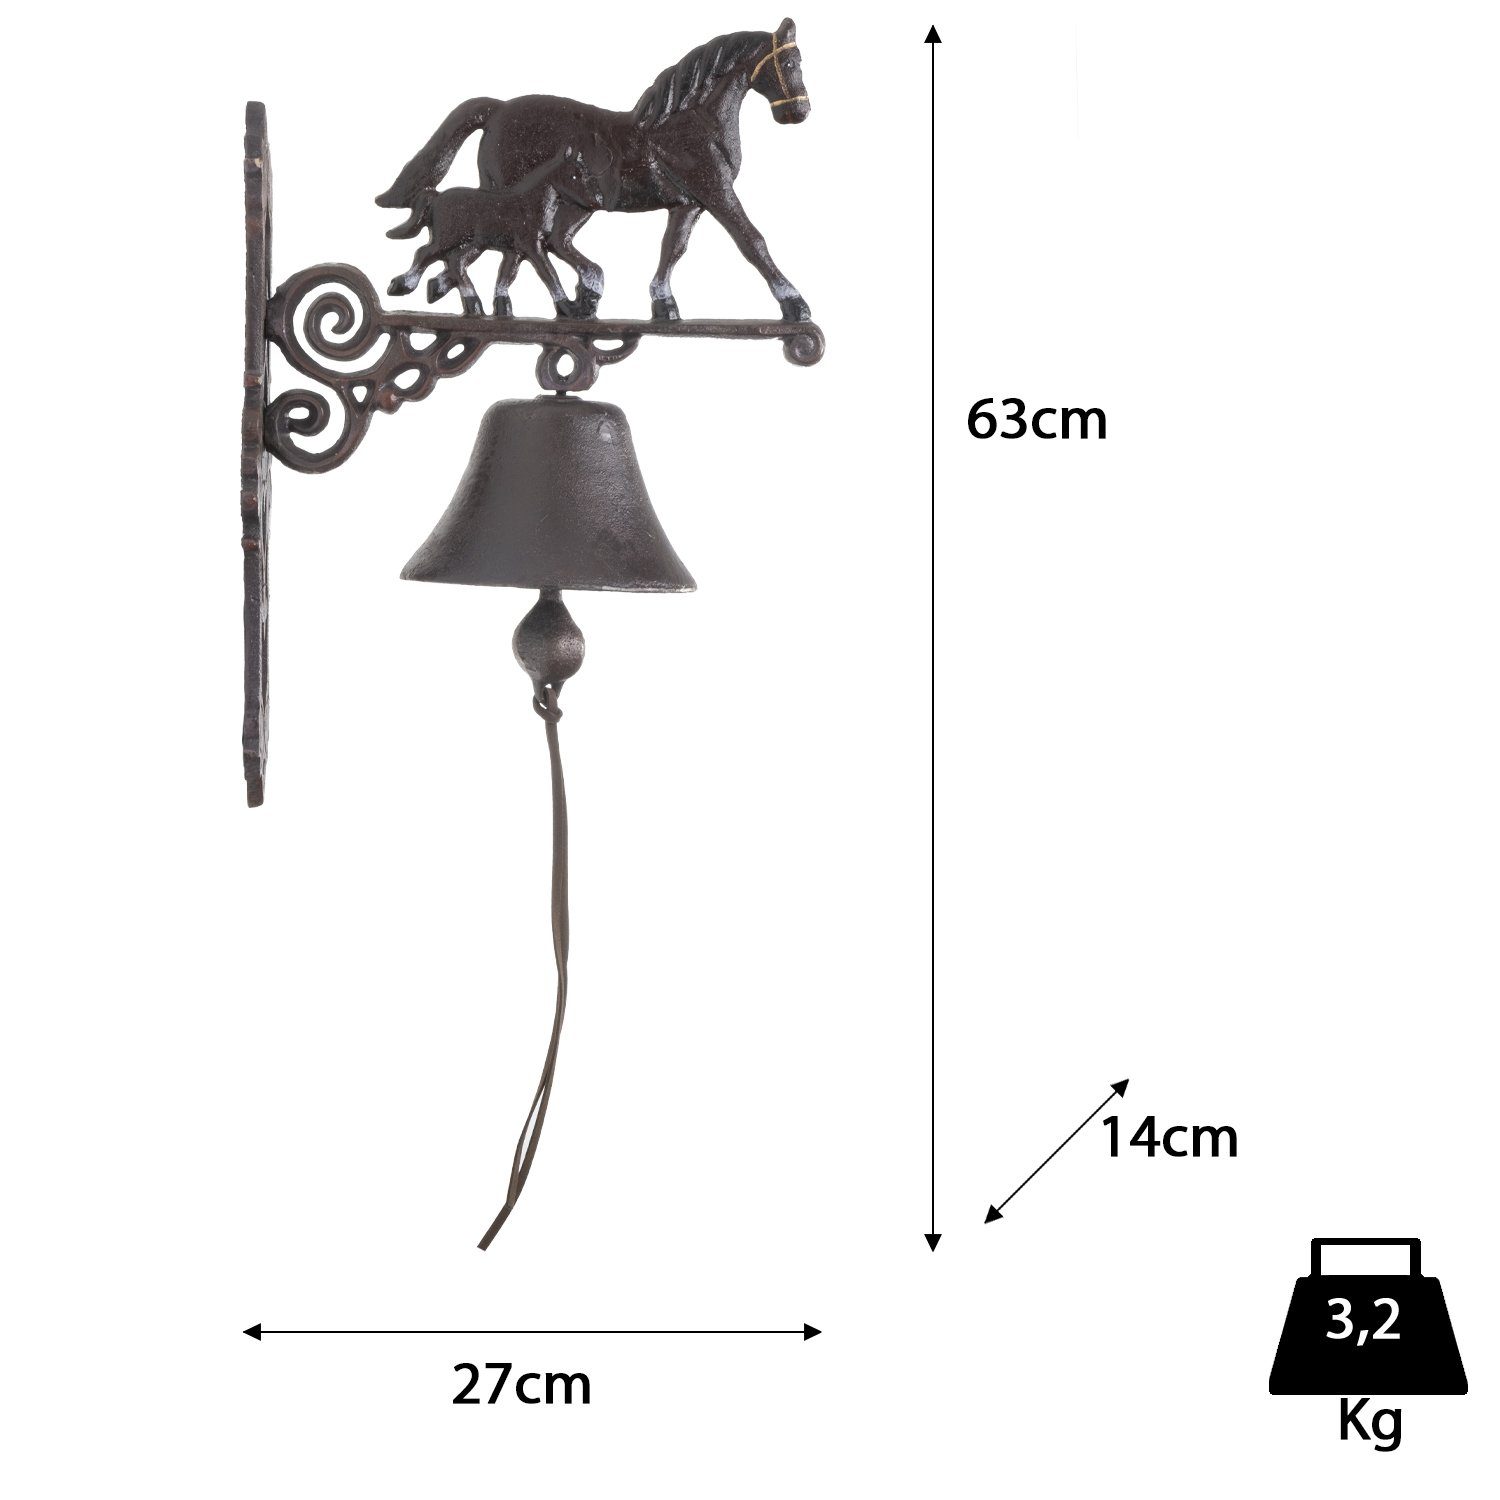 Fohlen, Gong Pferd Glocke mit Türglocke Antik Klingel Glocke (Wandglocke), Gusseisen Moritz Wandglocke Gartenfigur Landhaus